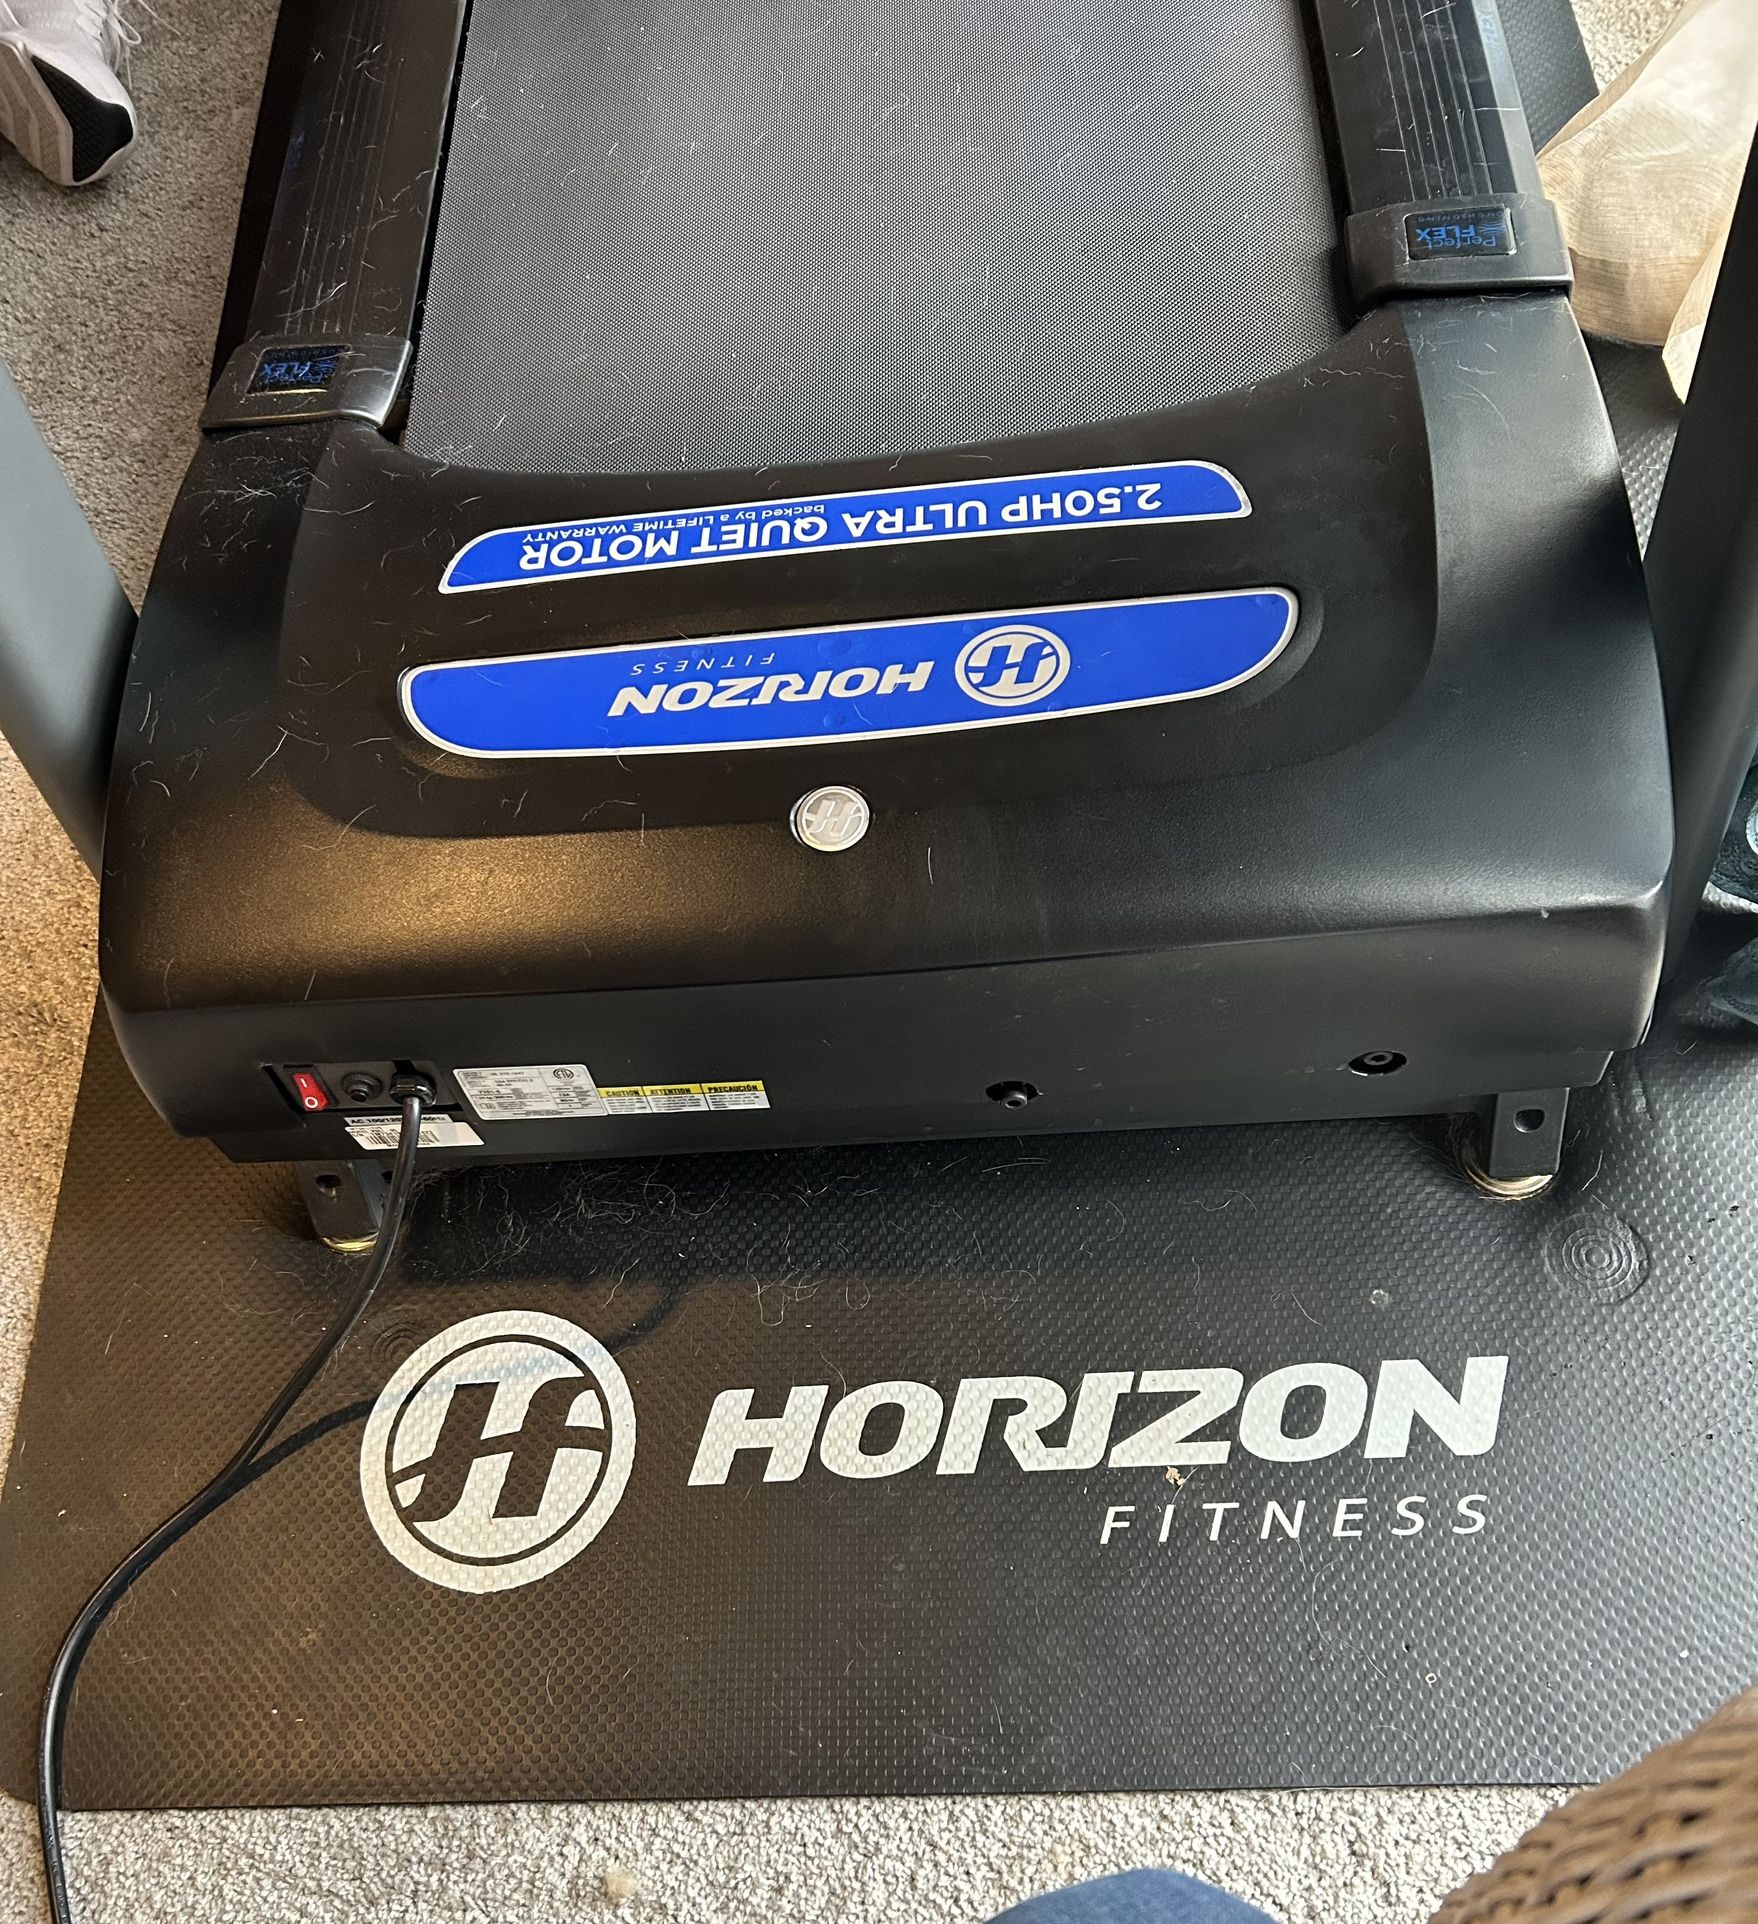 Horizon Treadmill With Bluetooth 